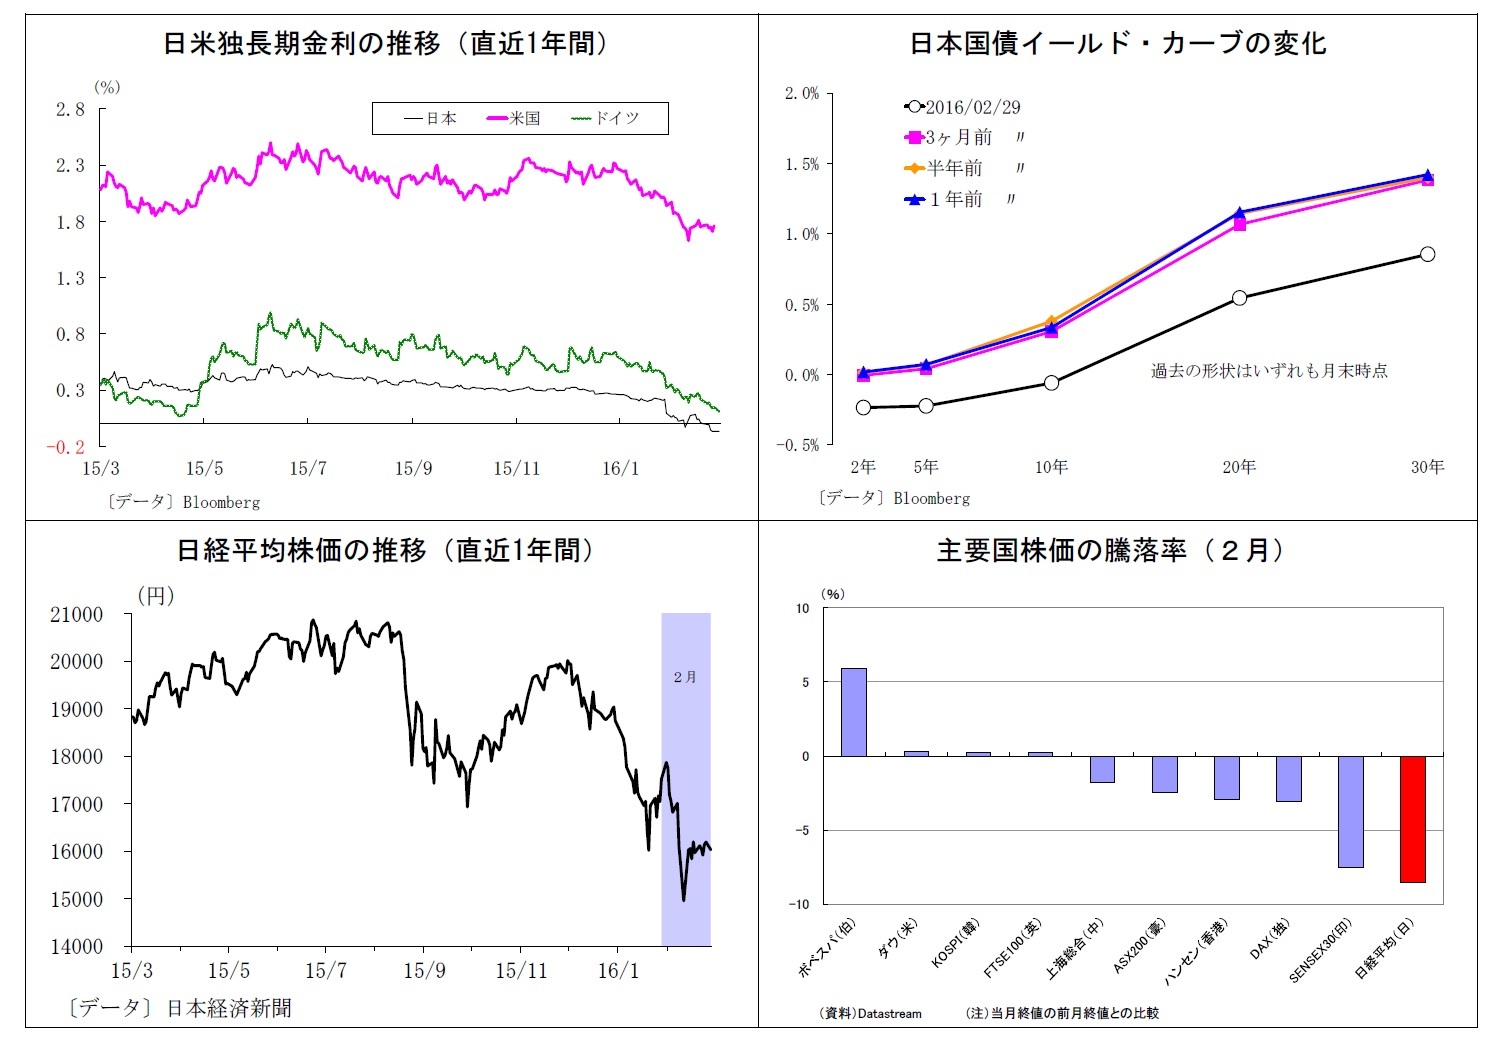 日米独長期金利の推移(直近1年間)/日本国債イールド・カーブの変化/日経平均株価の推移(直近1年間)/主要国株価の騰落率(２月)